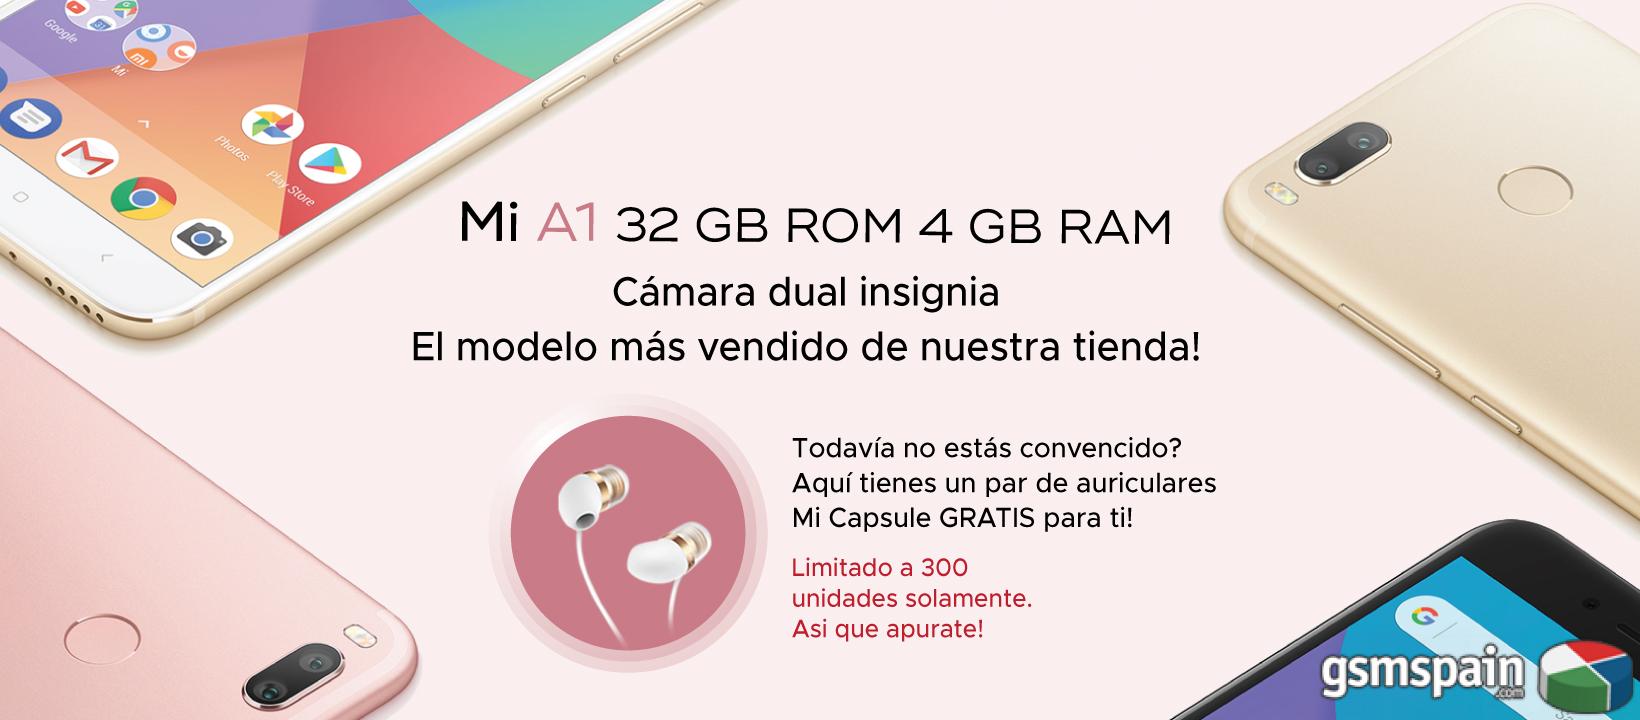 [VENDO] Xiaomi Mi A1 32GB a 160! REGALO AURICULARES XIAOMI MI CAPSULE!! Garantia 24 meses!